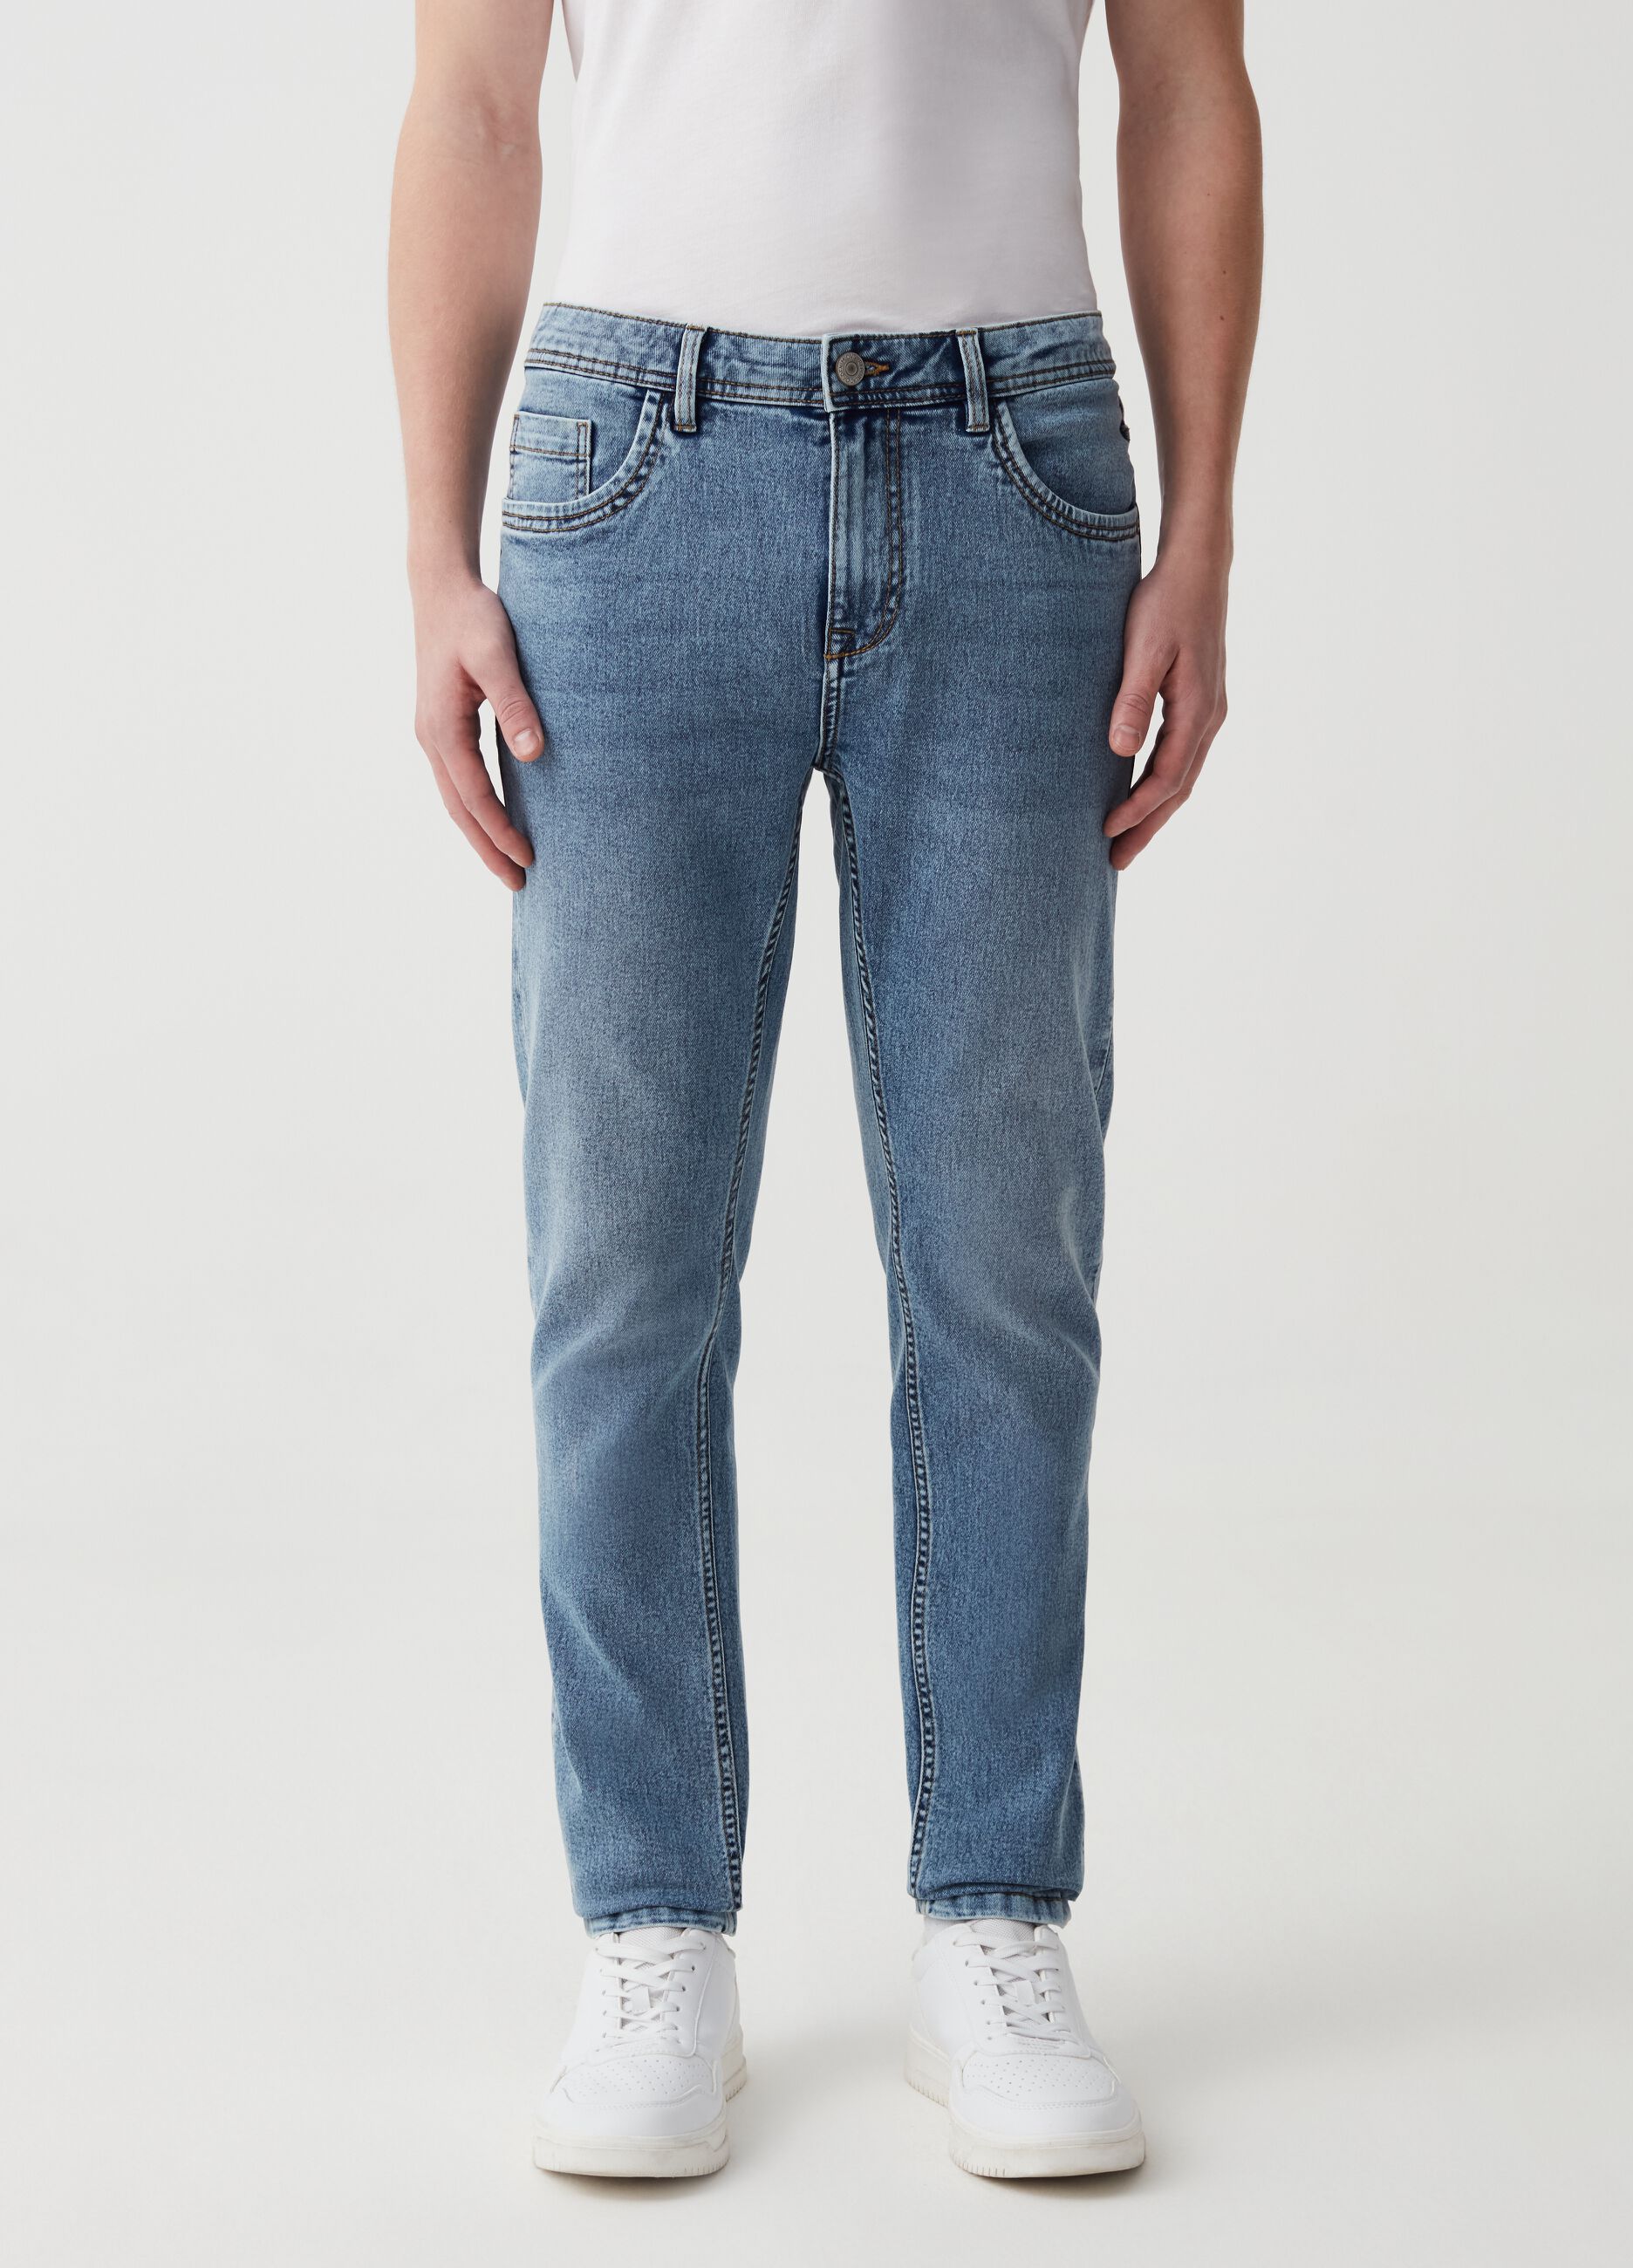 Jeans super skinny fit cinque tasche